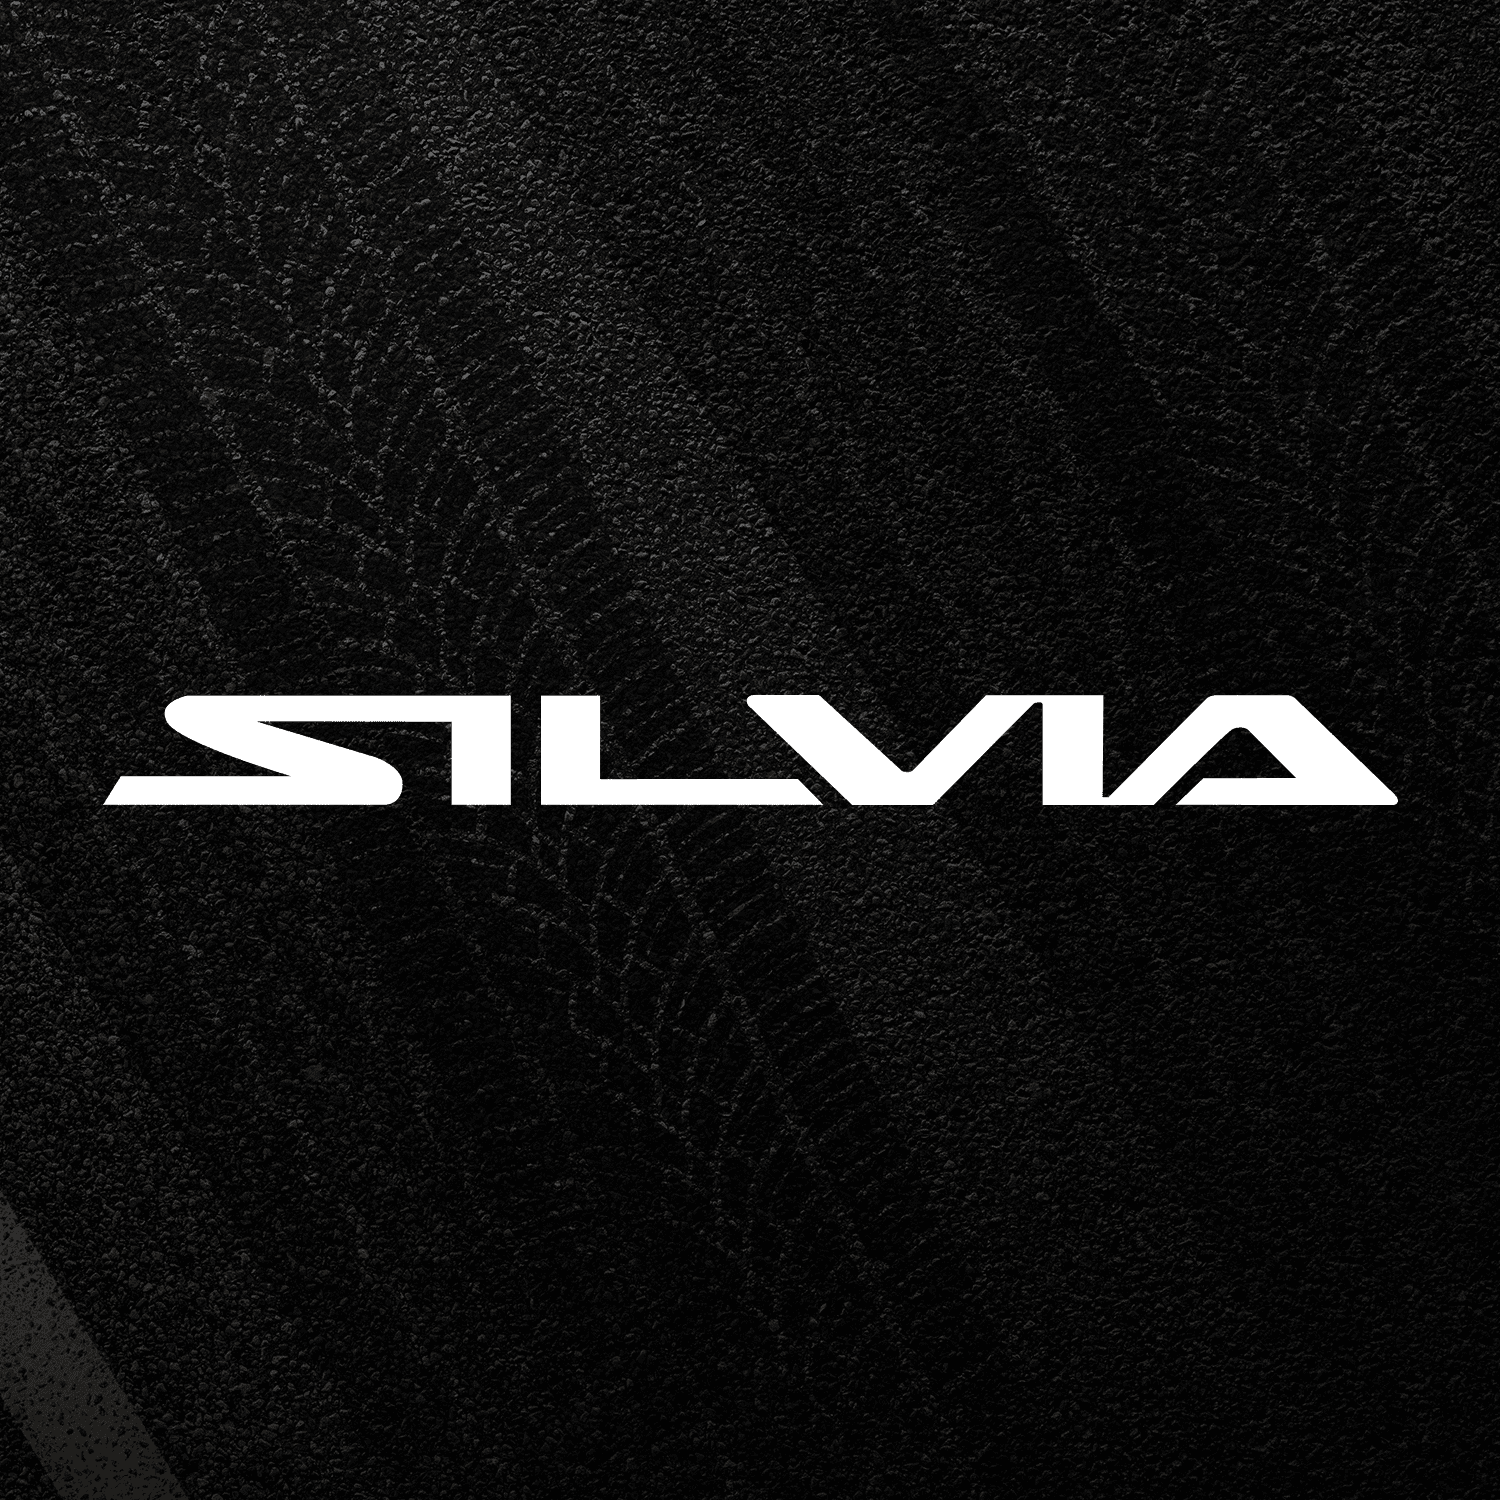 Silvia Logo - Nissan Silvia Sticker Emblem JDM Drift S13 S14 S15